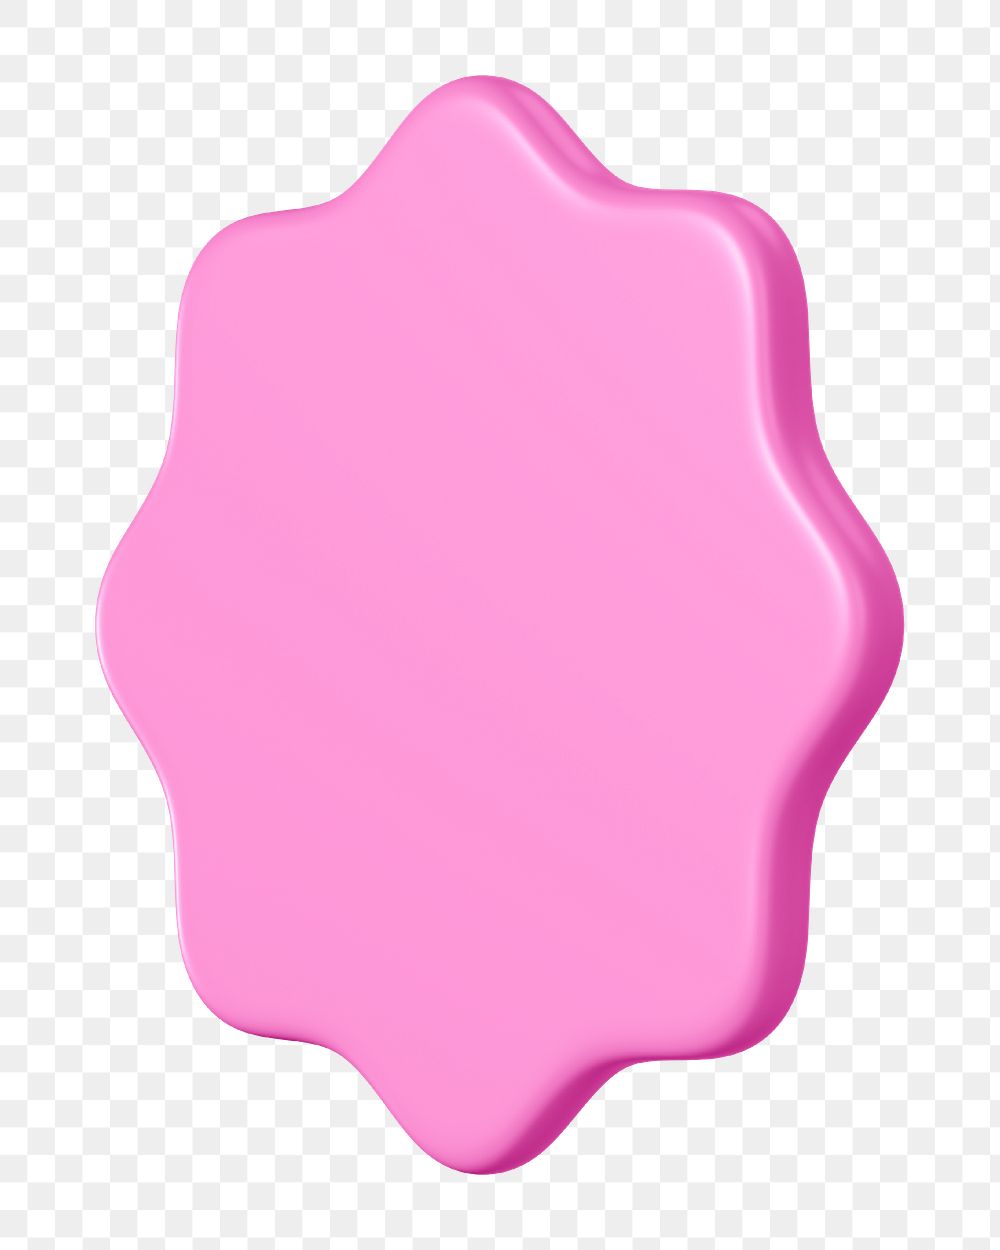 Pink starburst badge png sticker, 3D rendering graphic, transparent background